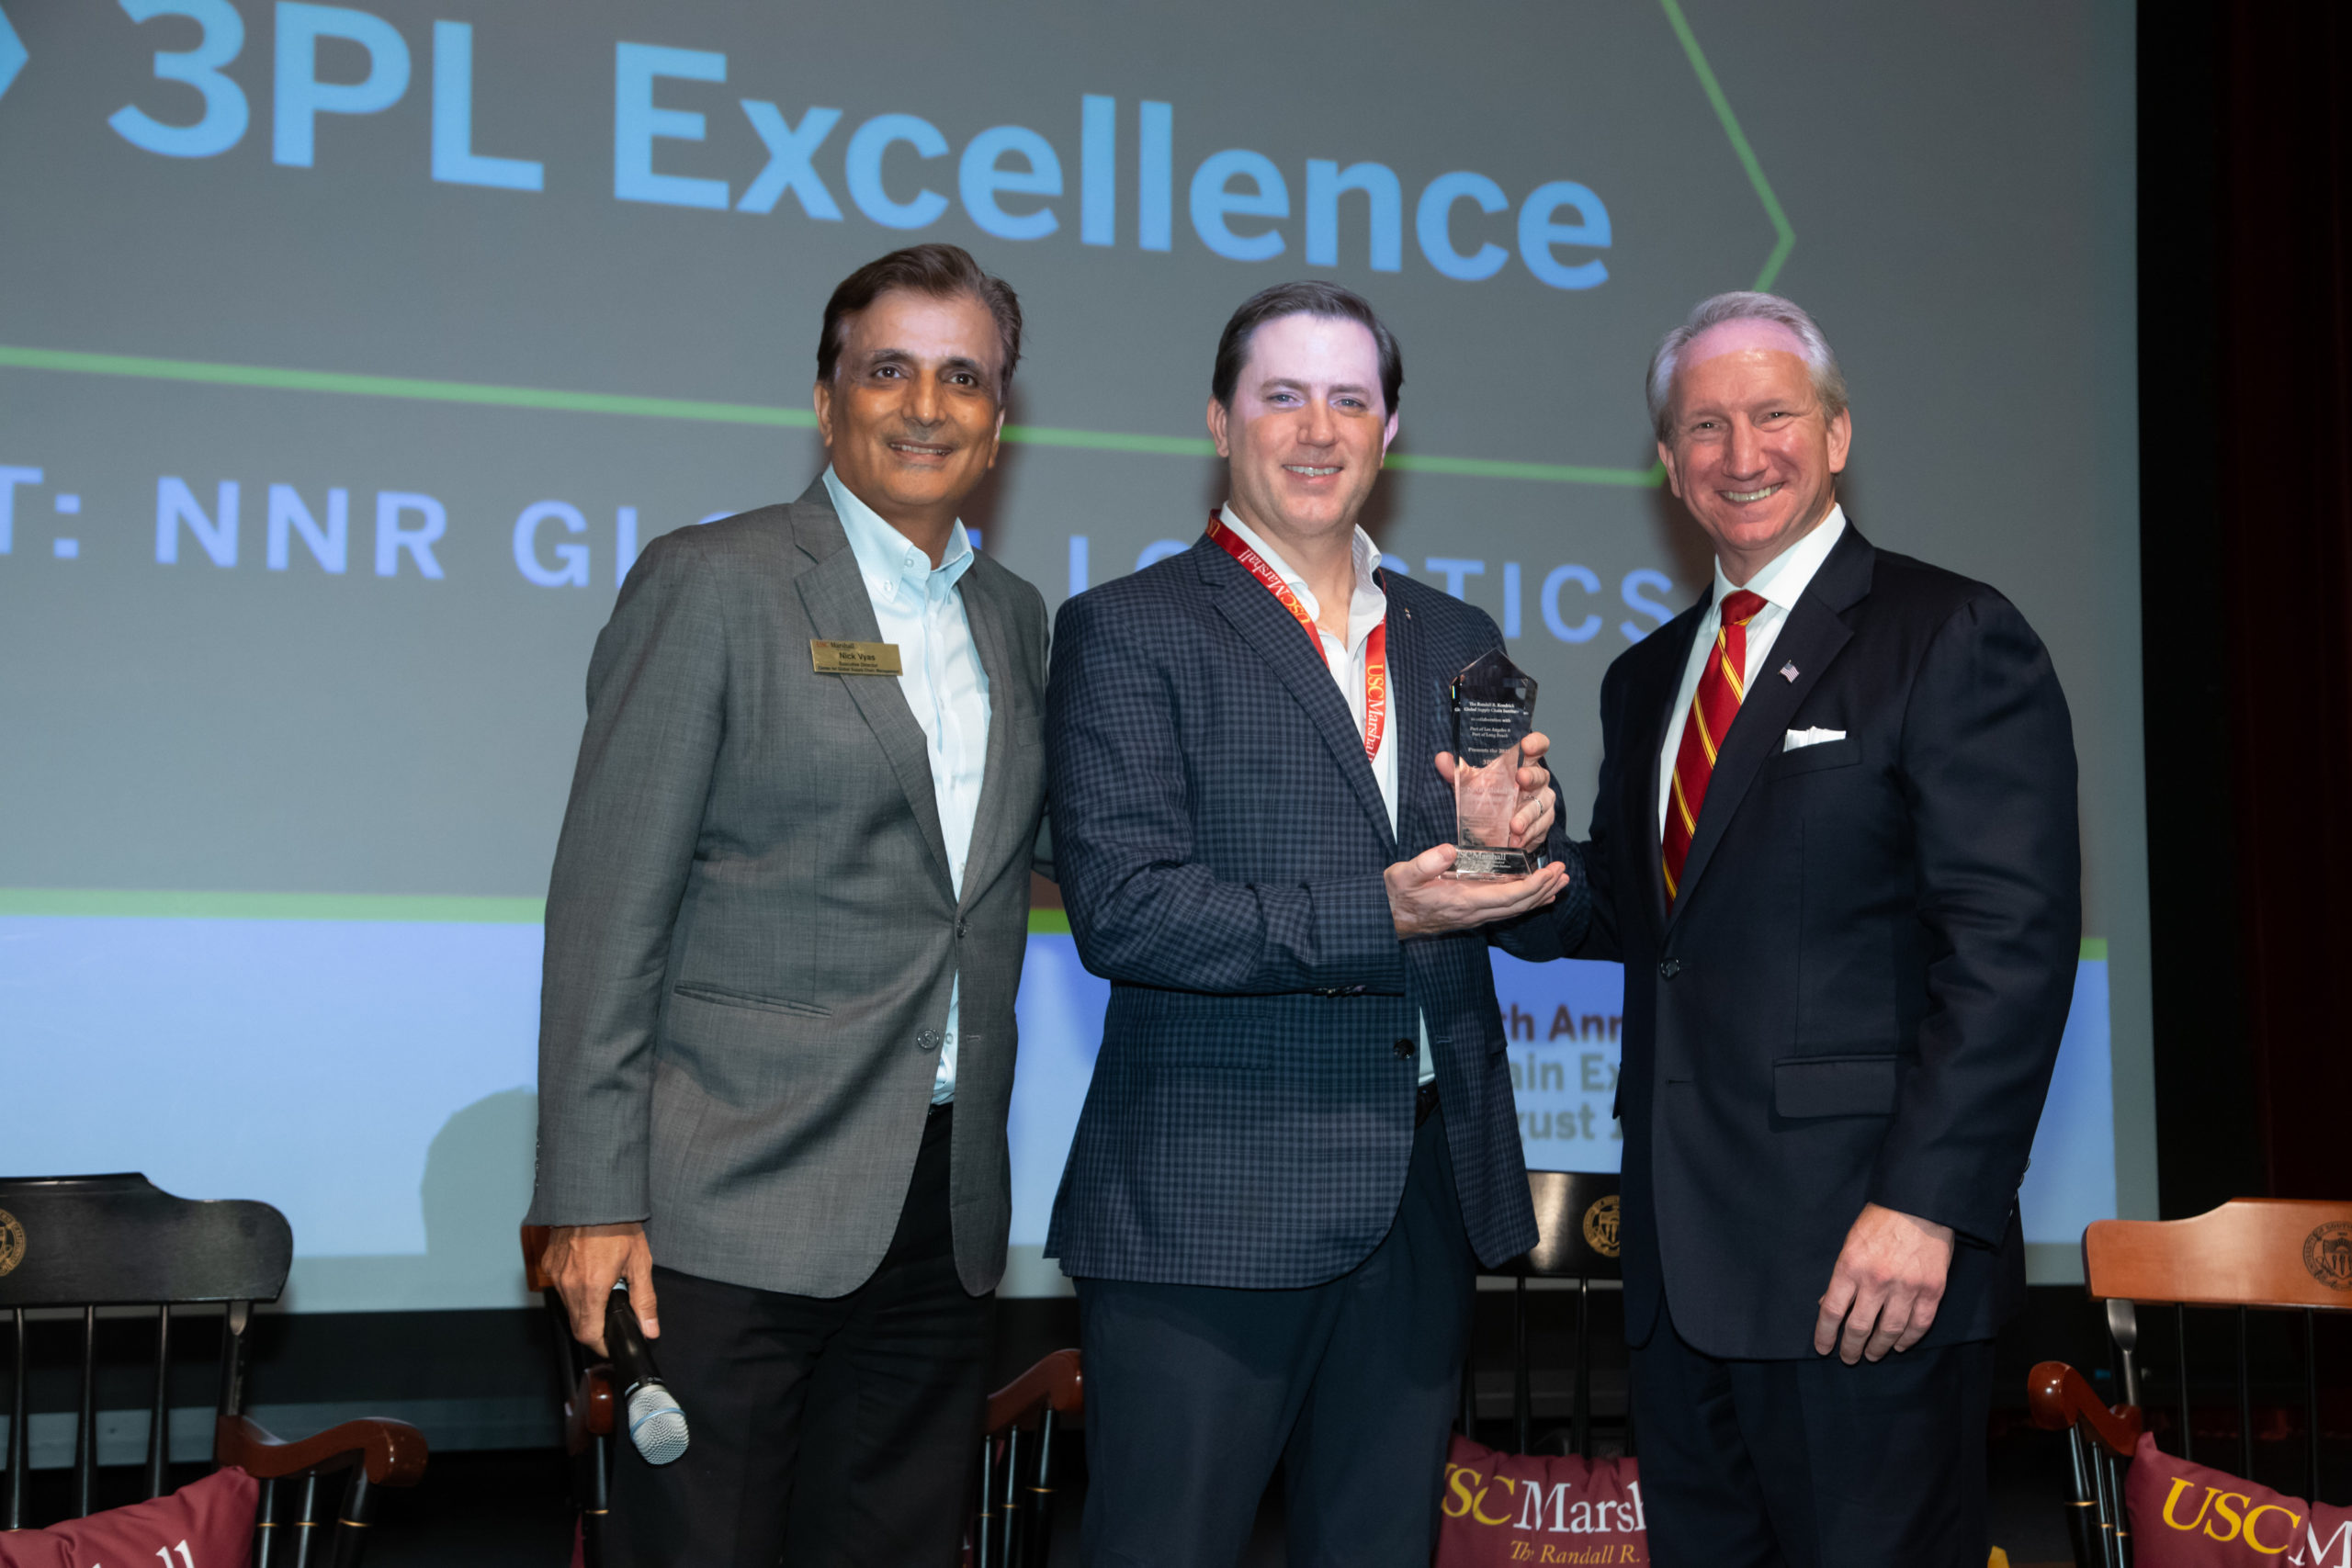 3PL Excellence Award